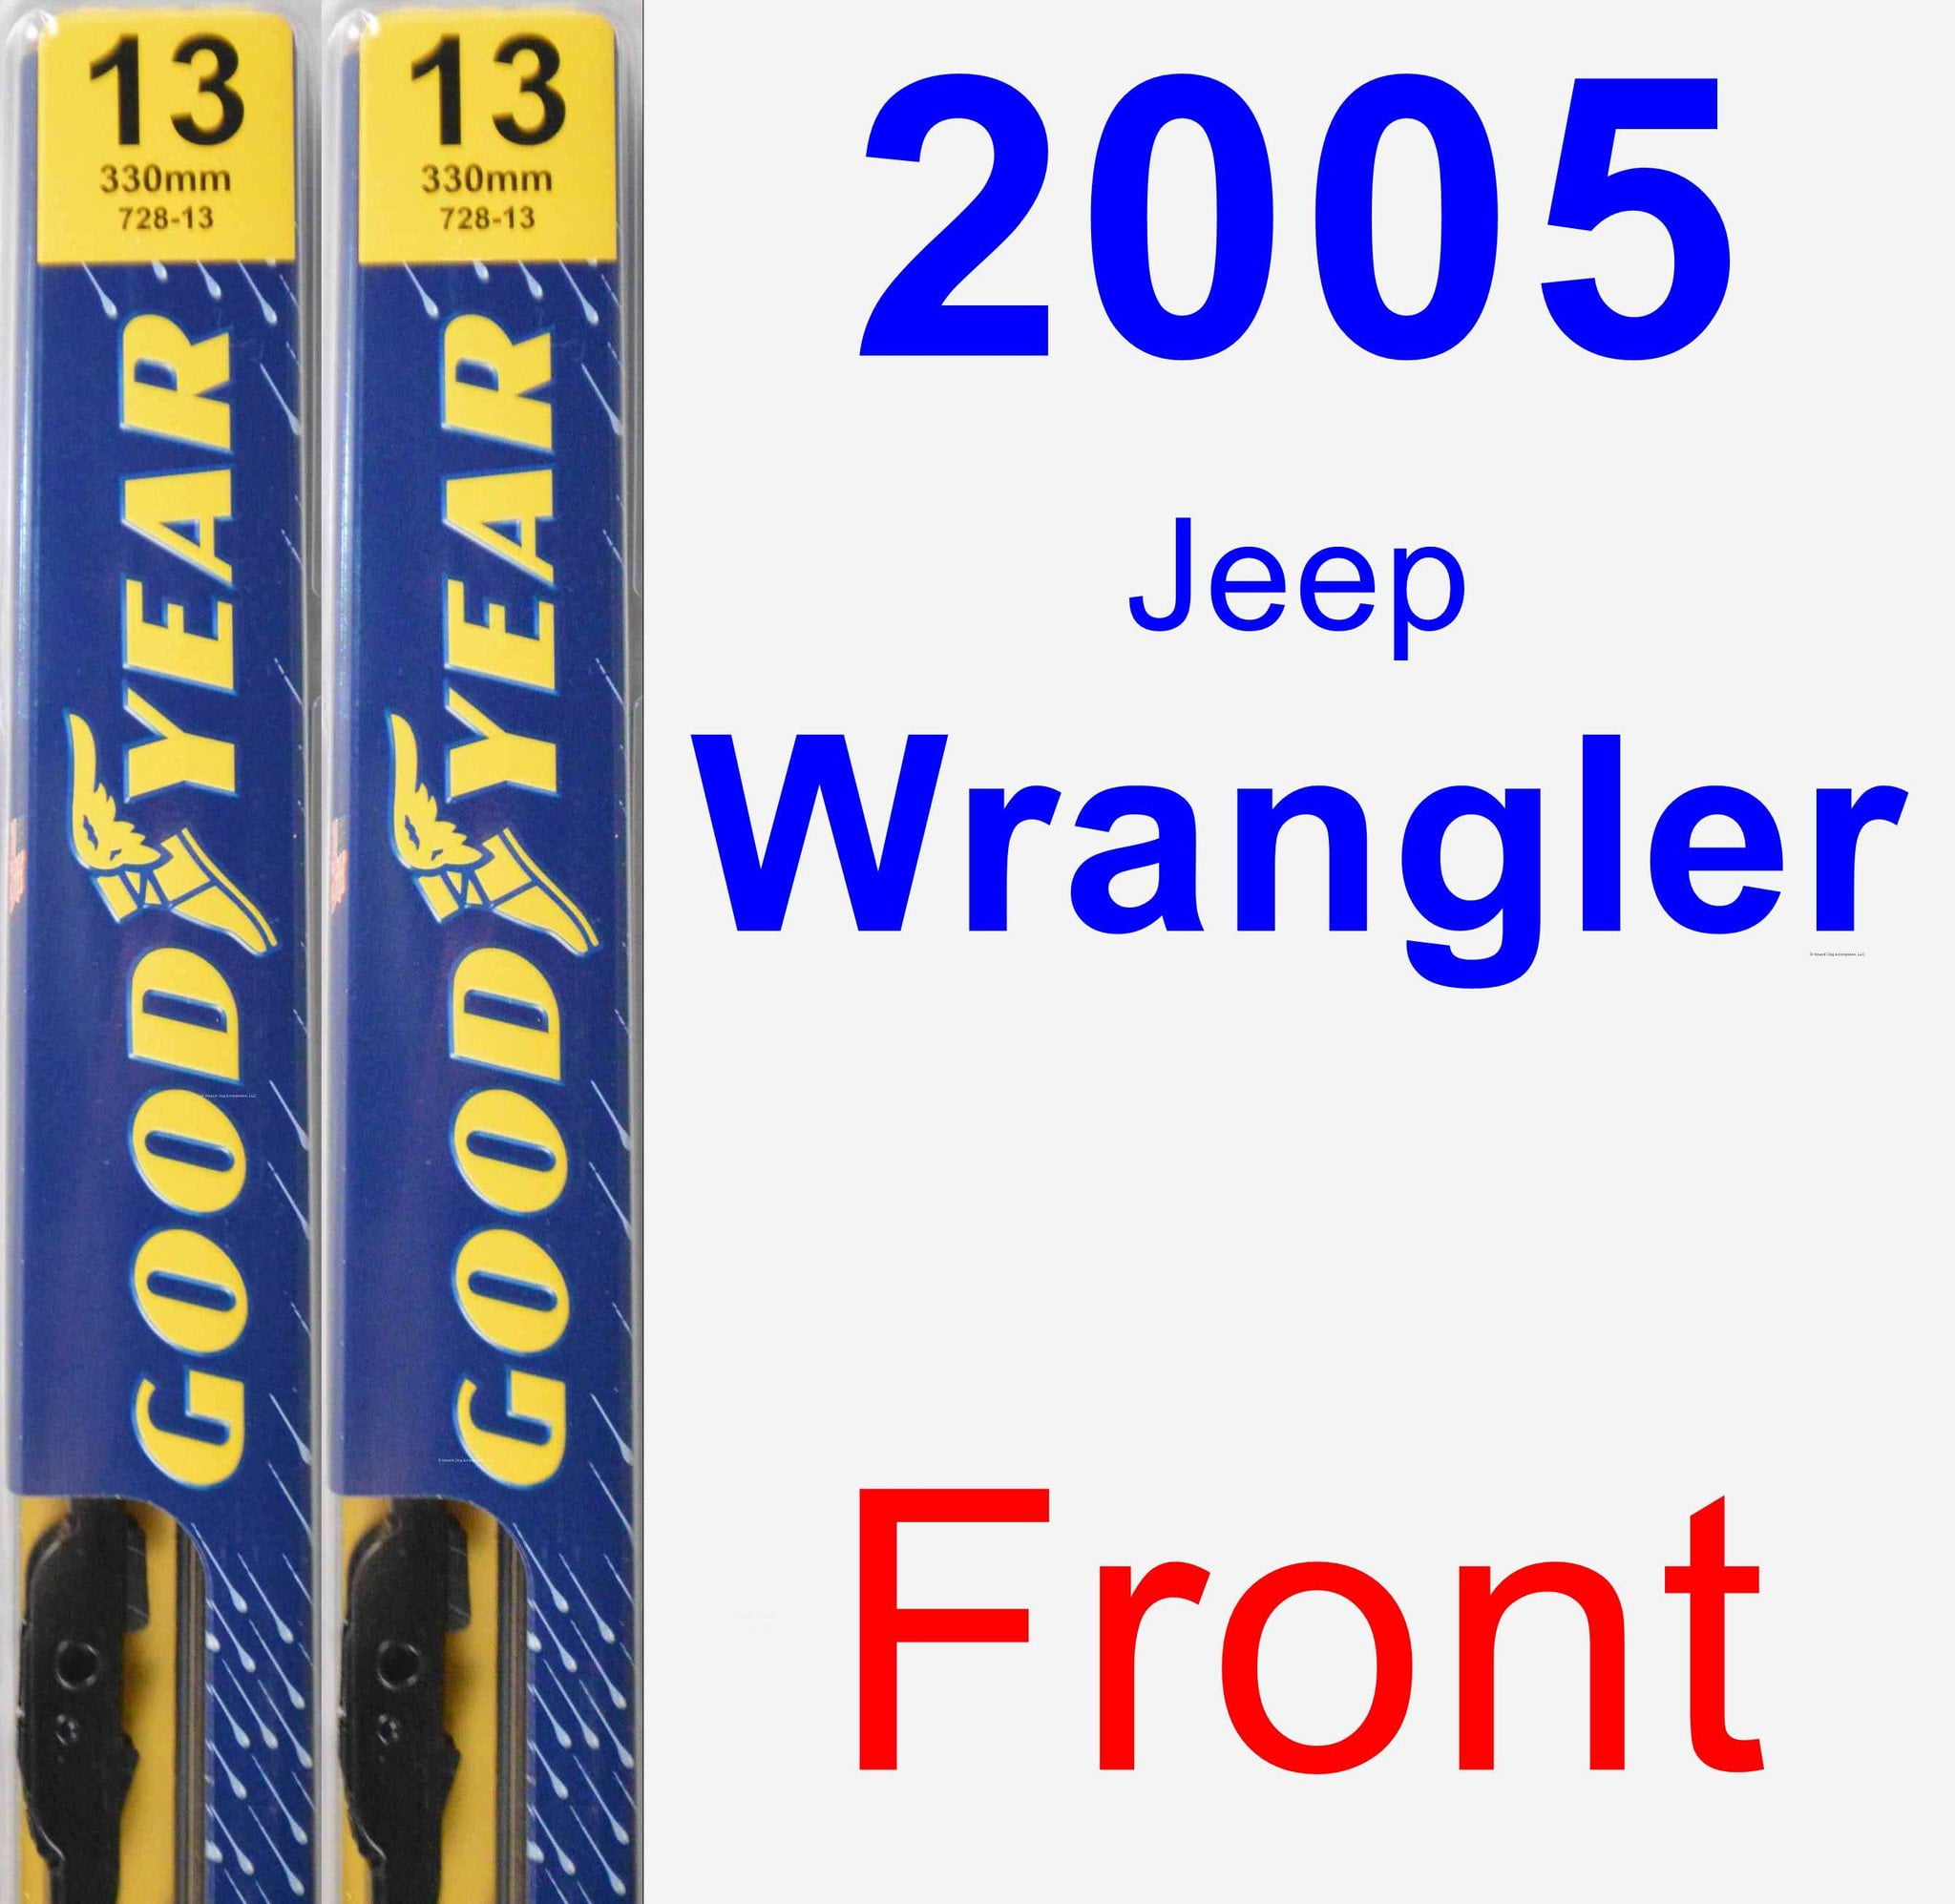 2005 Jeep Wrangler Rear Wiper Blade - Premium 